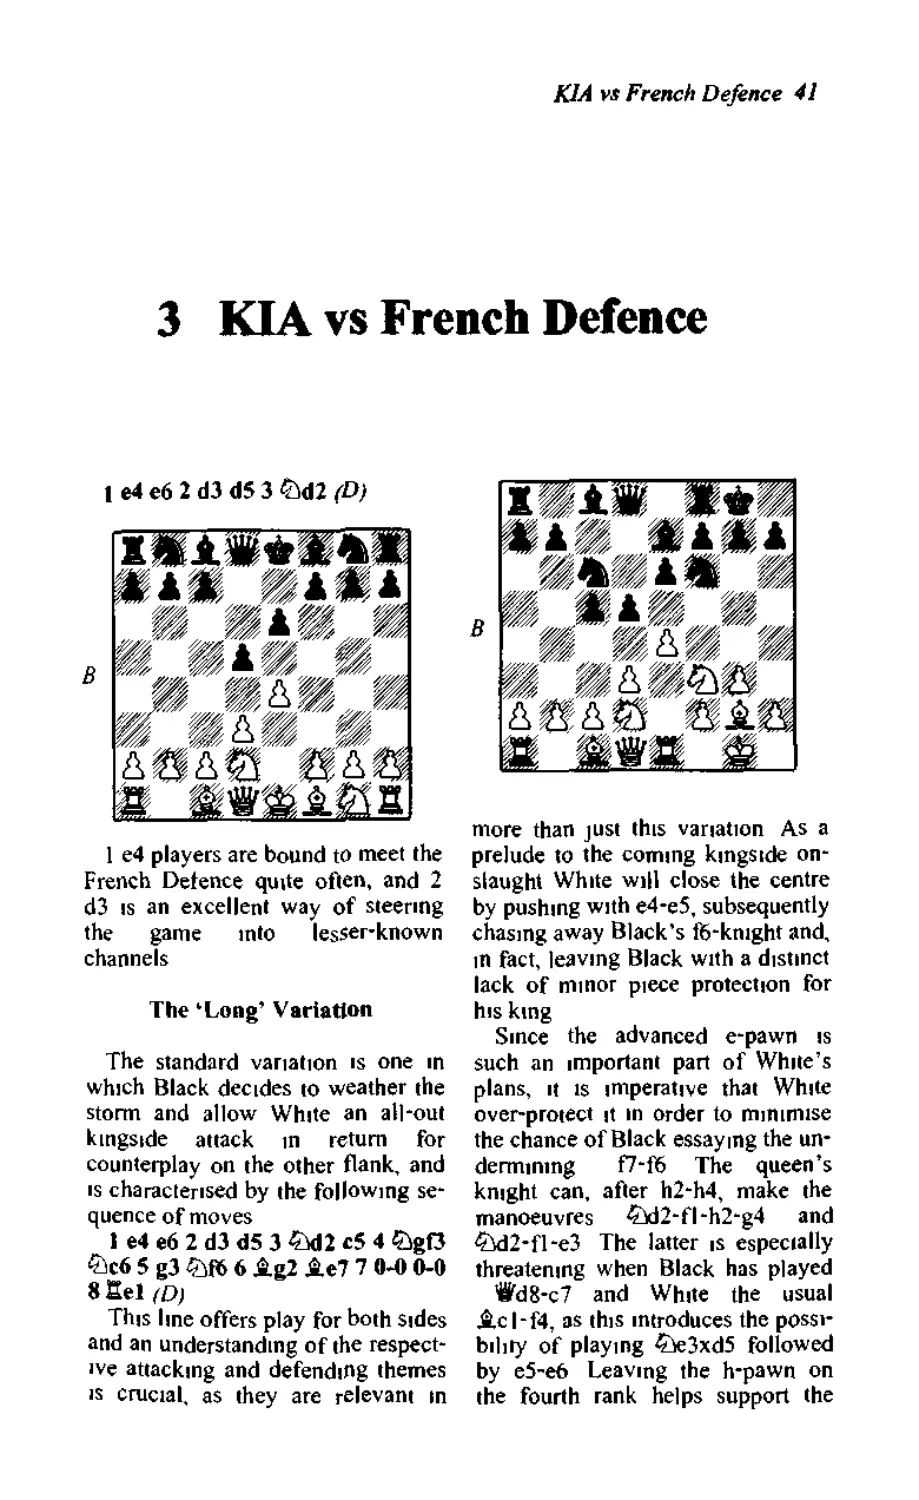 3. KIA vs french defence